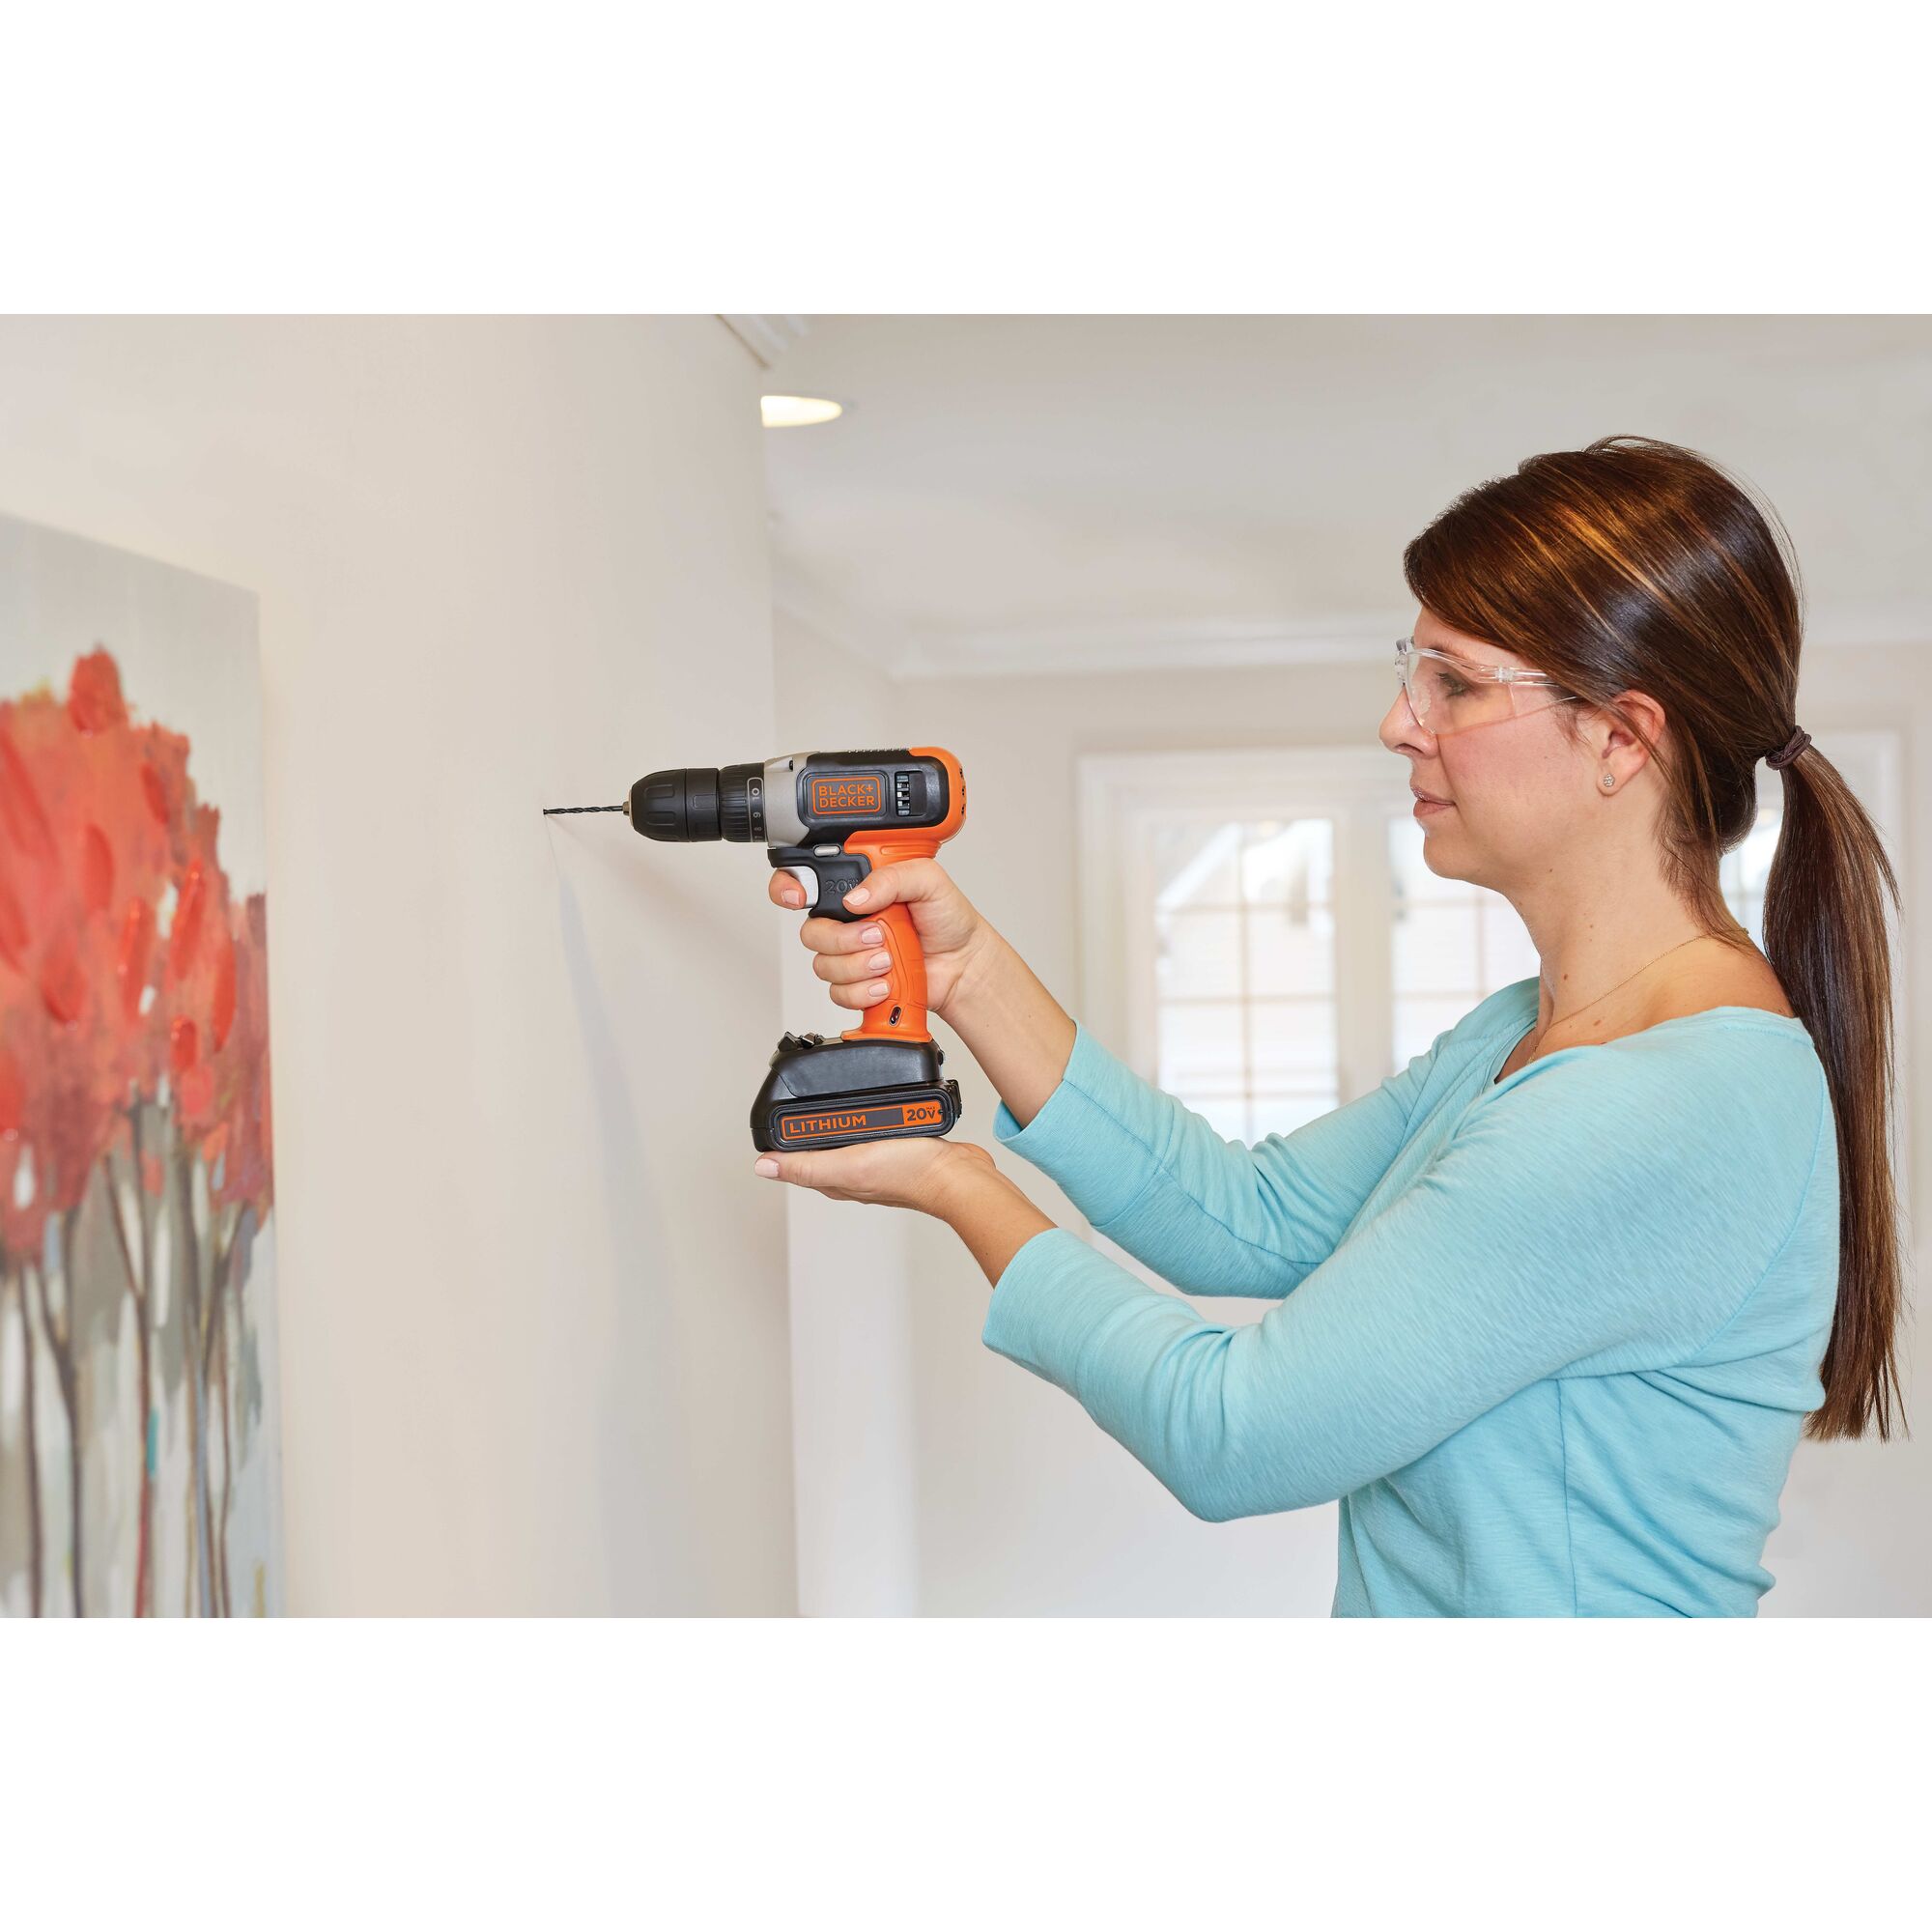 Woman using BLACK+DECKER drill in a home 